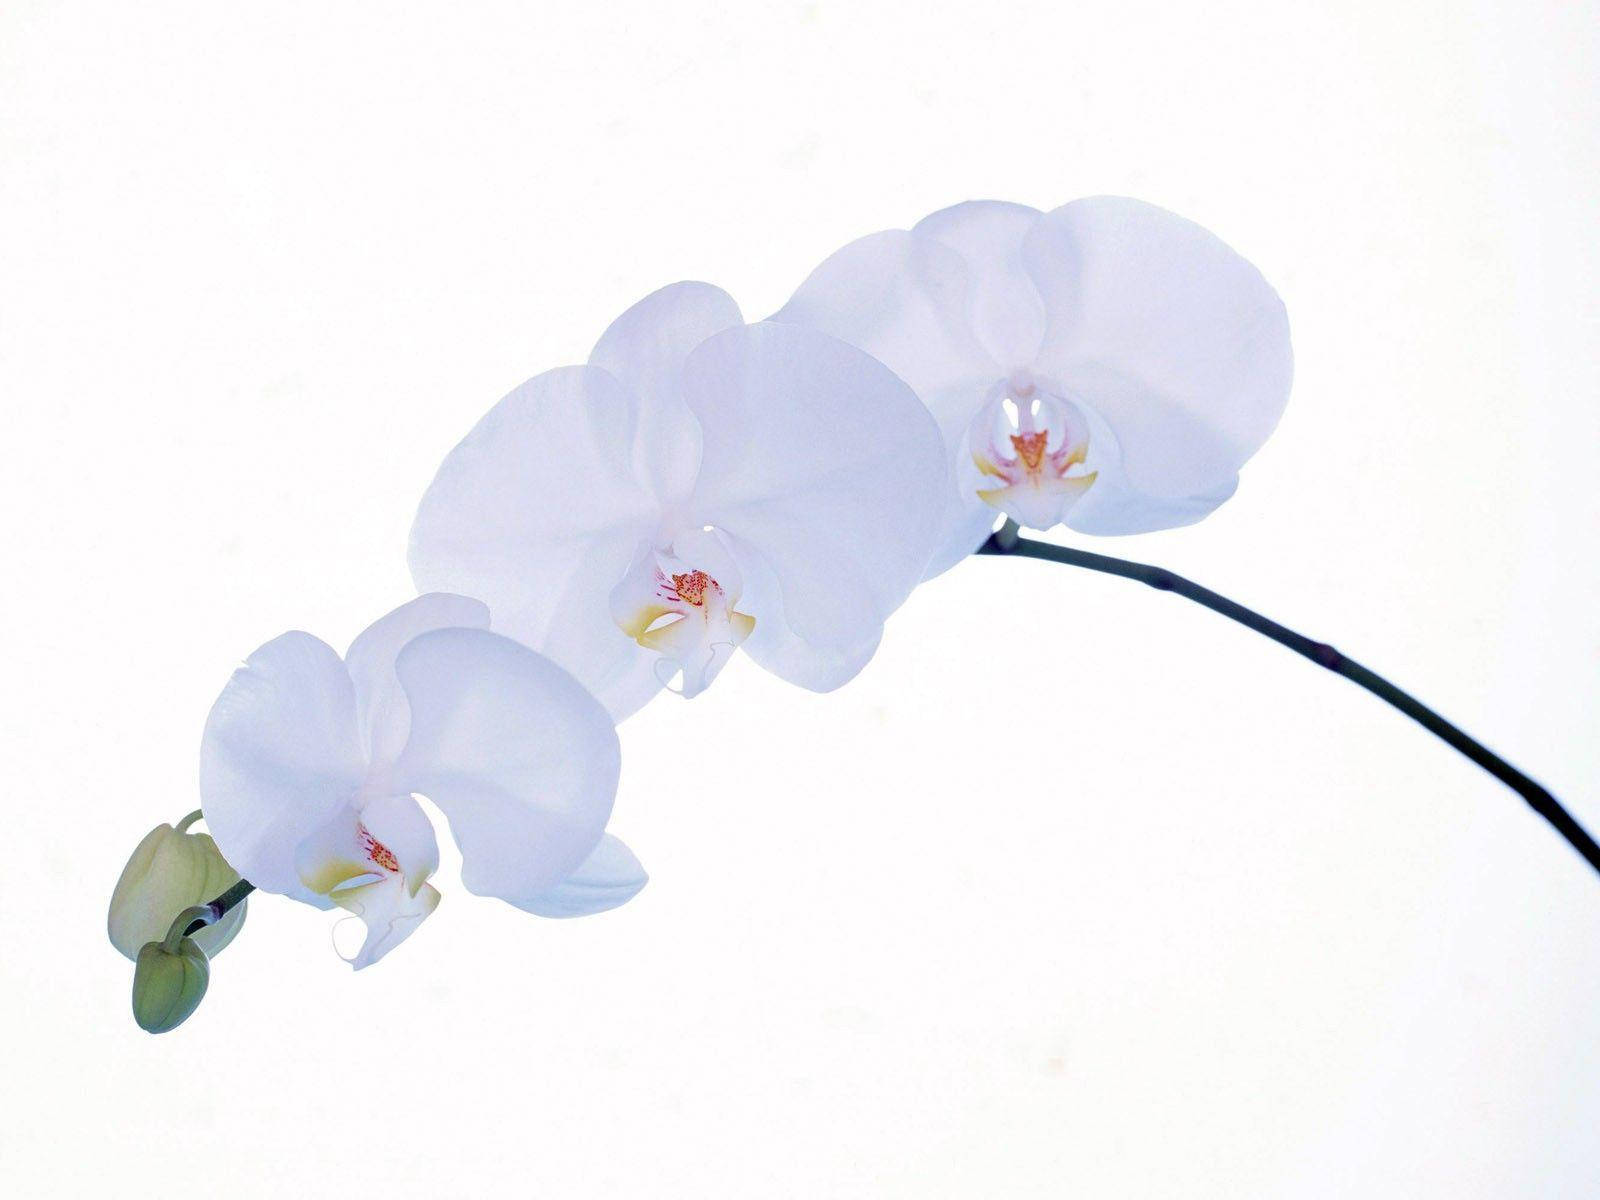 White Orchid Trio Background